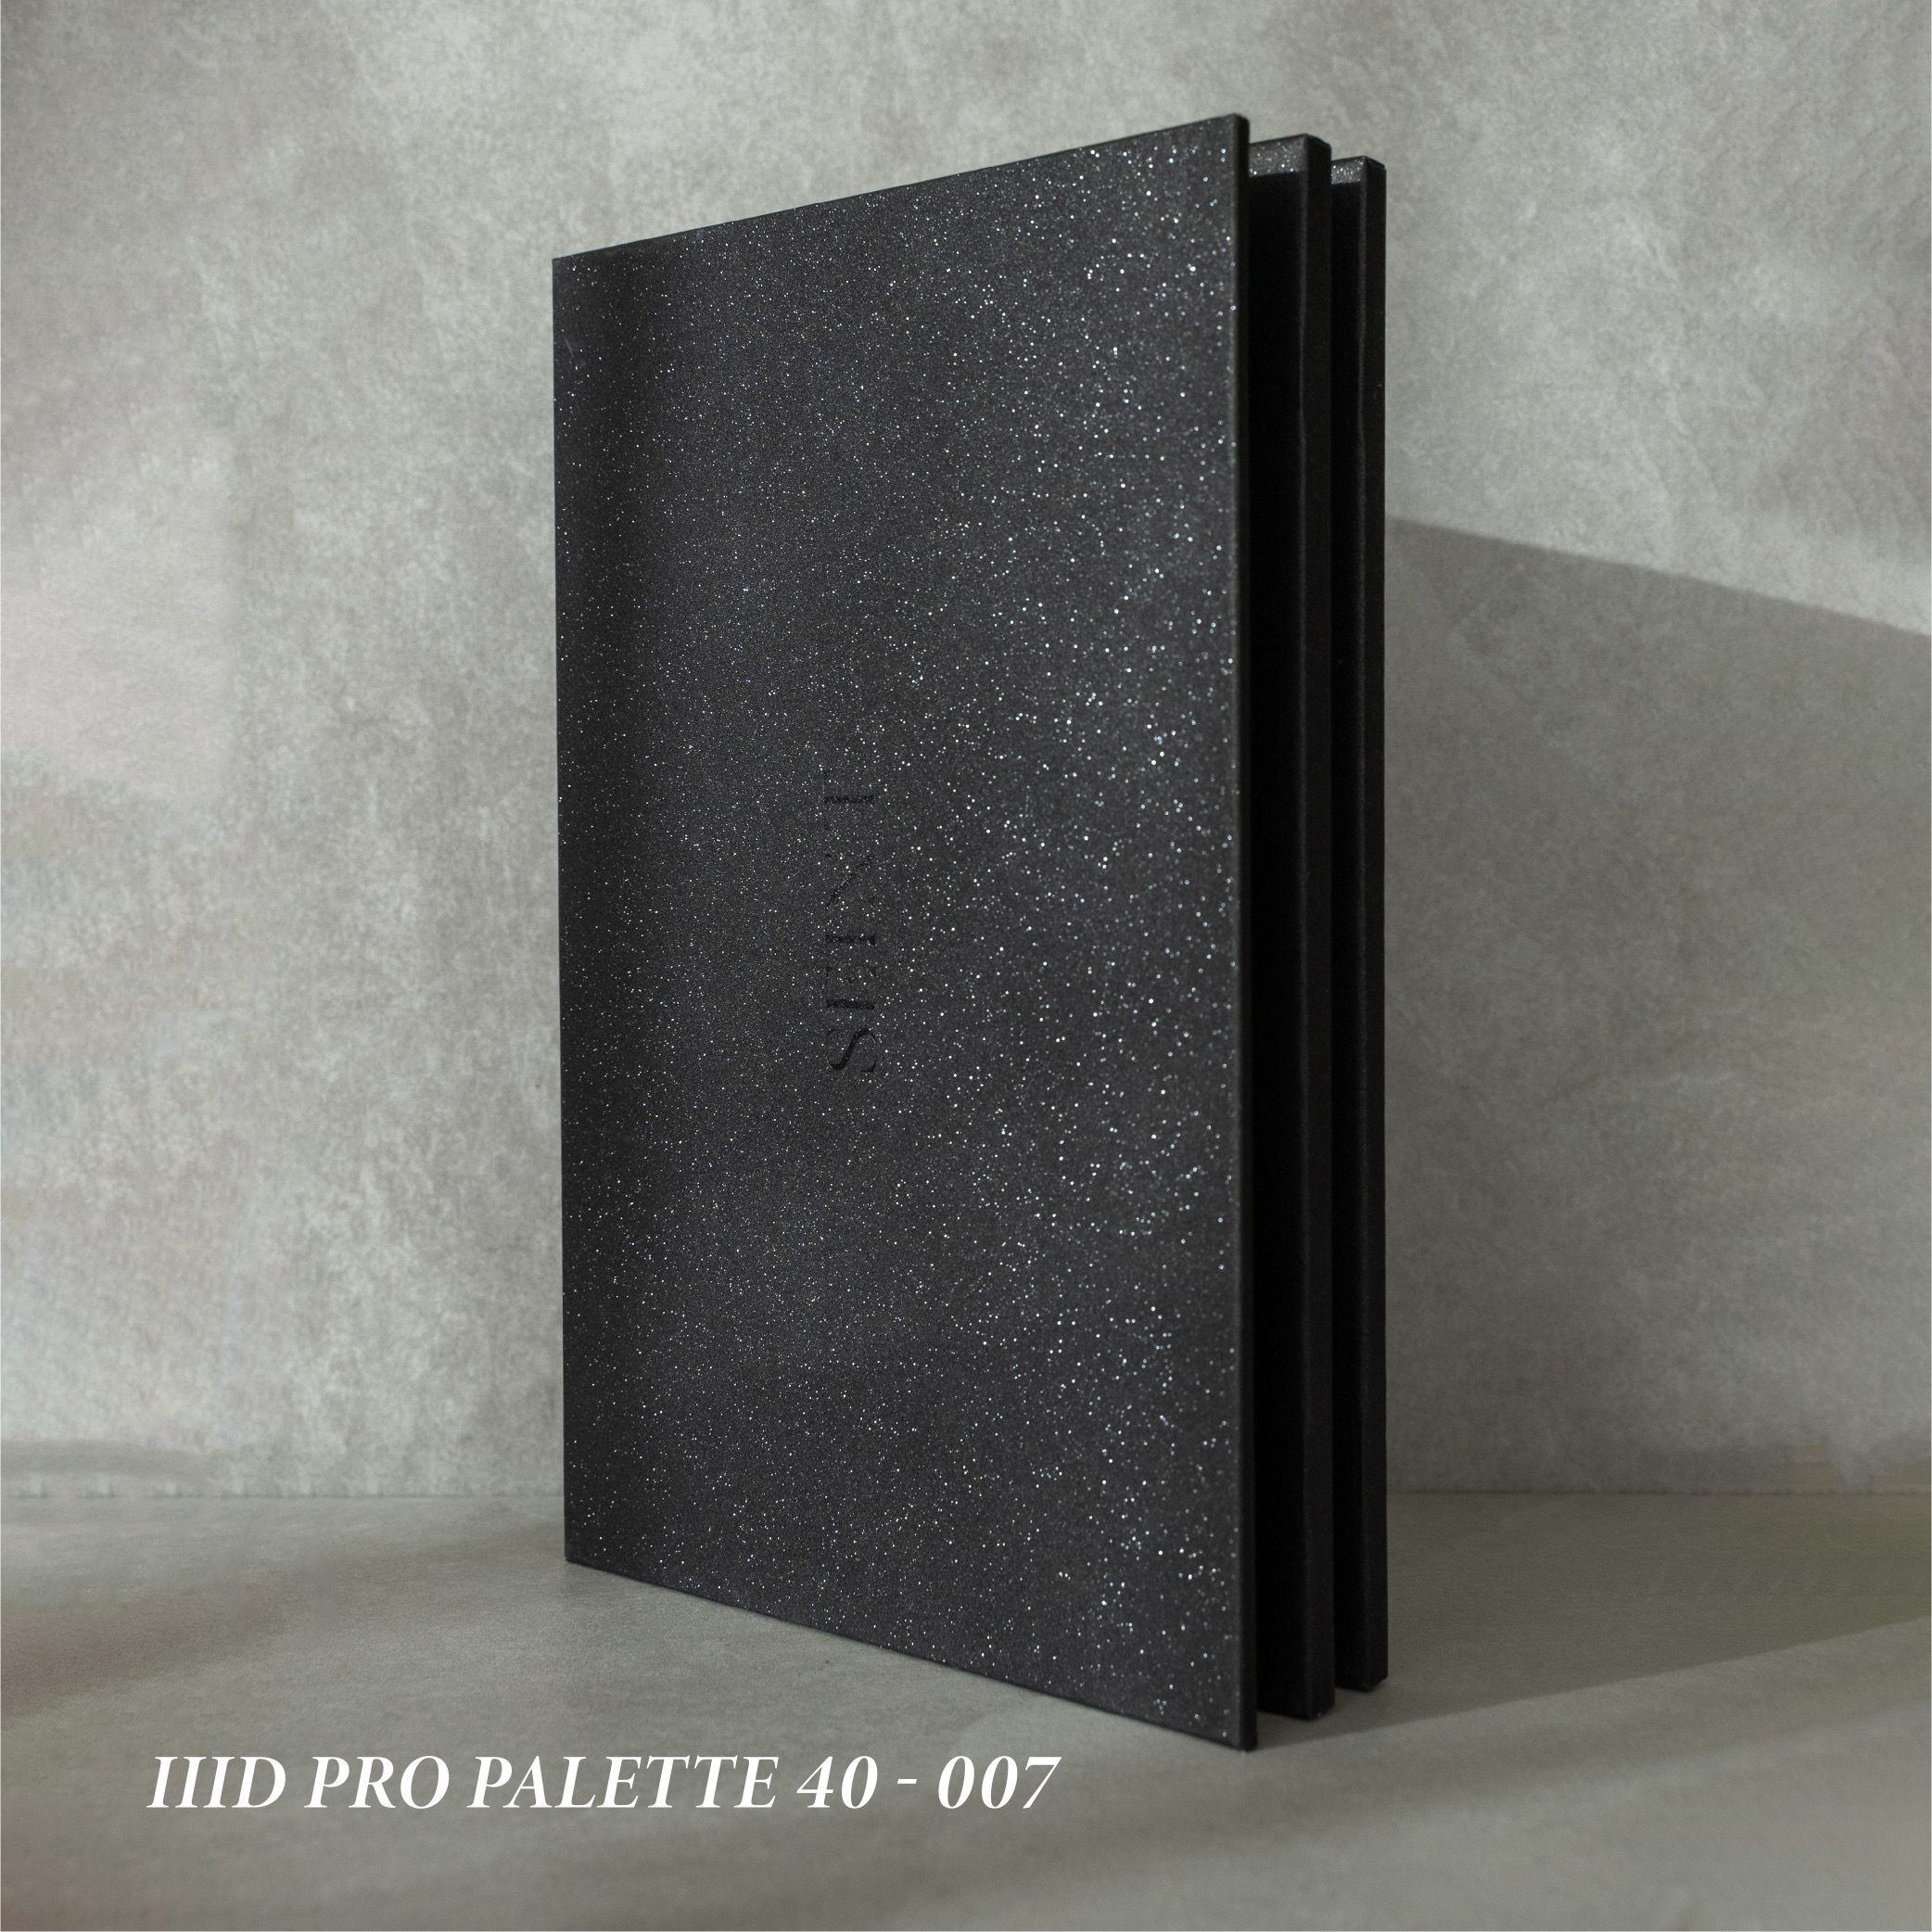 IIID Pro Palette 40 -007